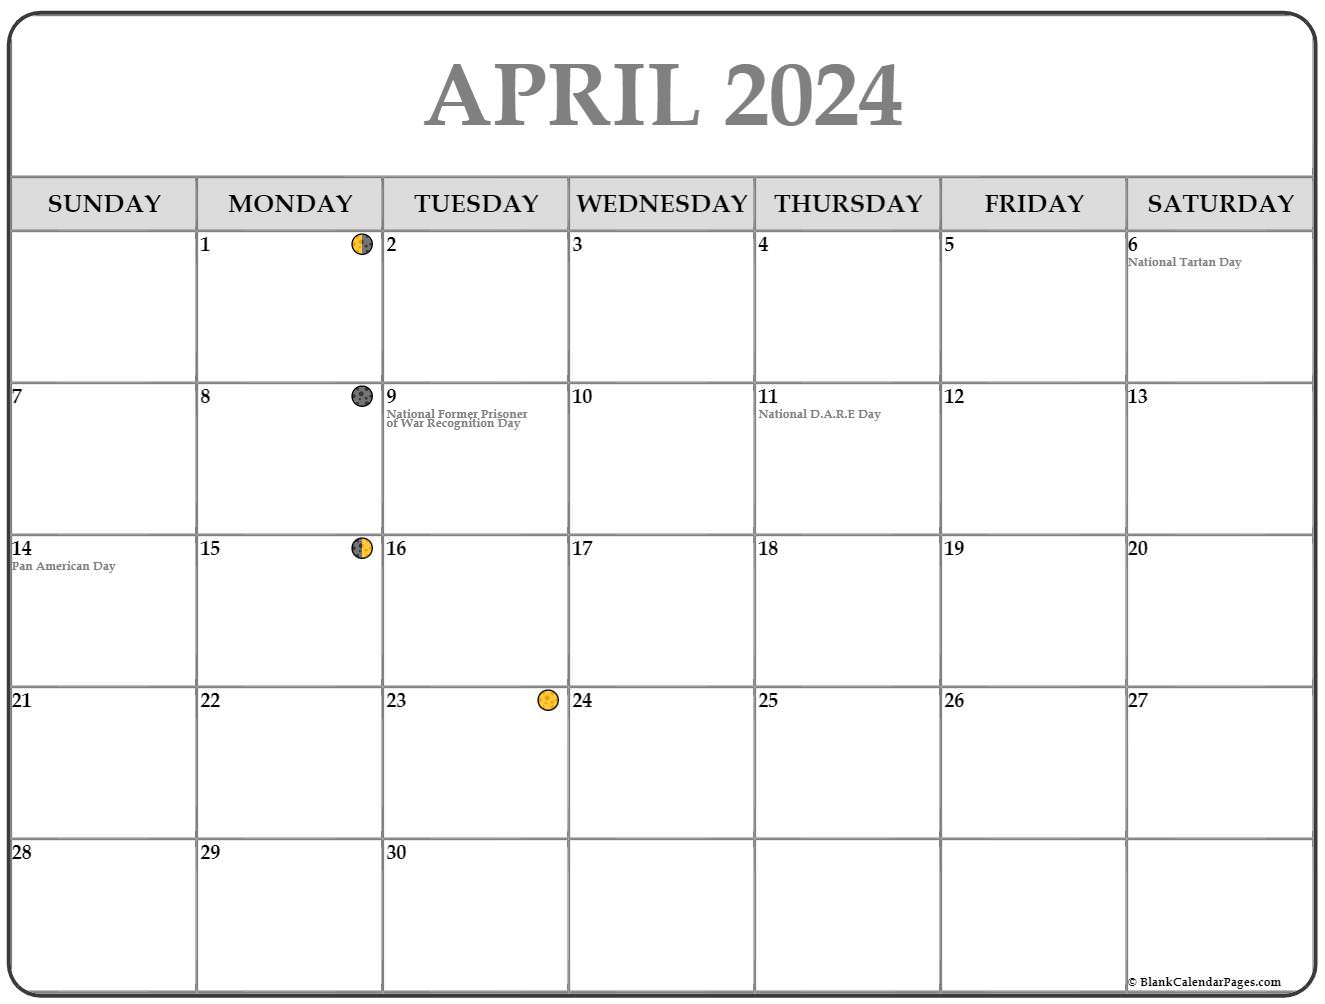 April 2024 Lunar Calendar Moon Phase Calendar